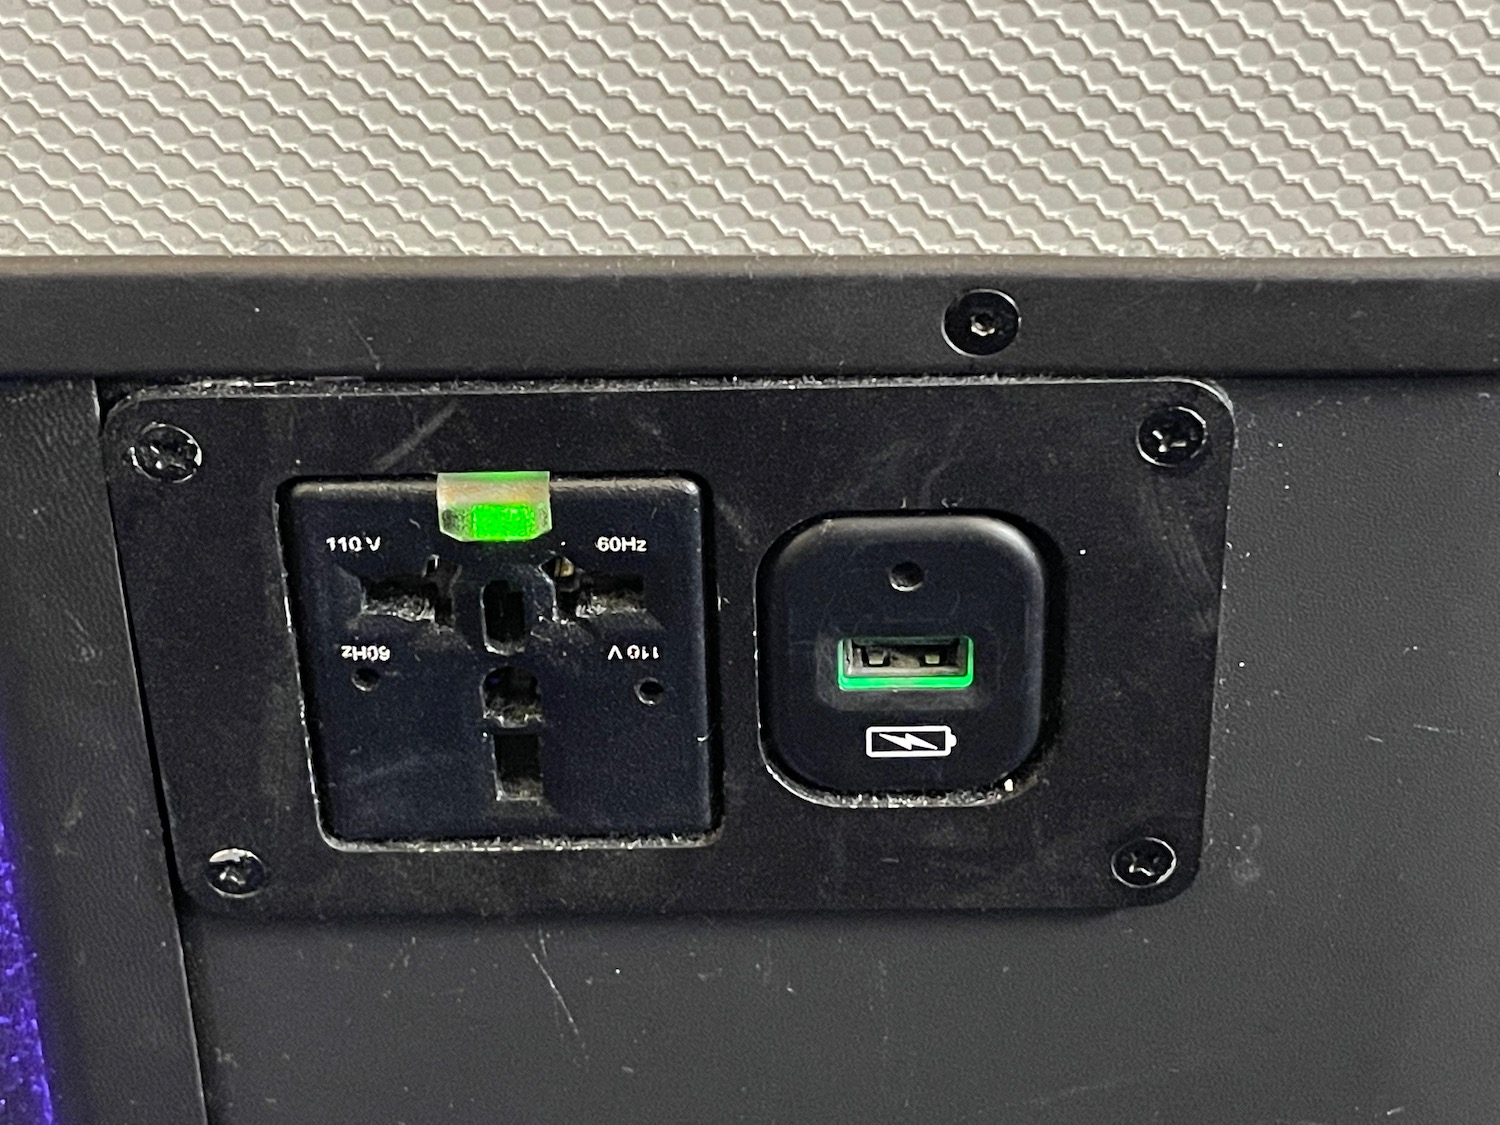 a black rectangular outlet with a green light